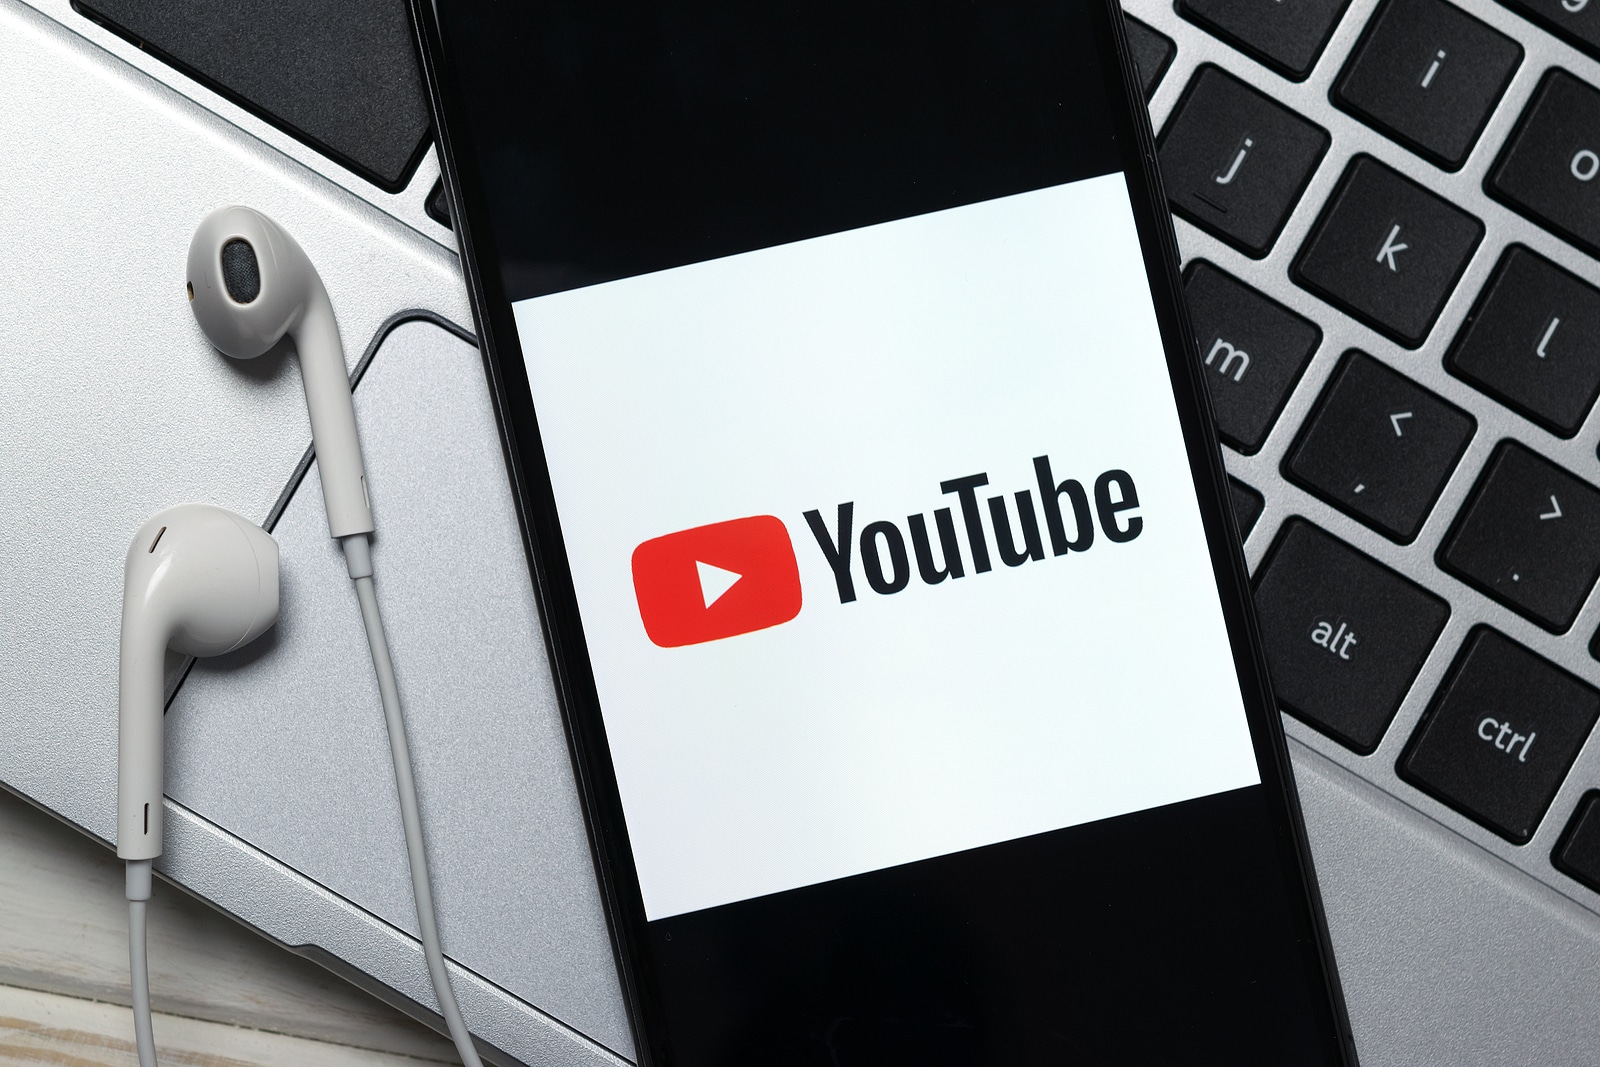 YouTube logo on mobile screen